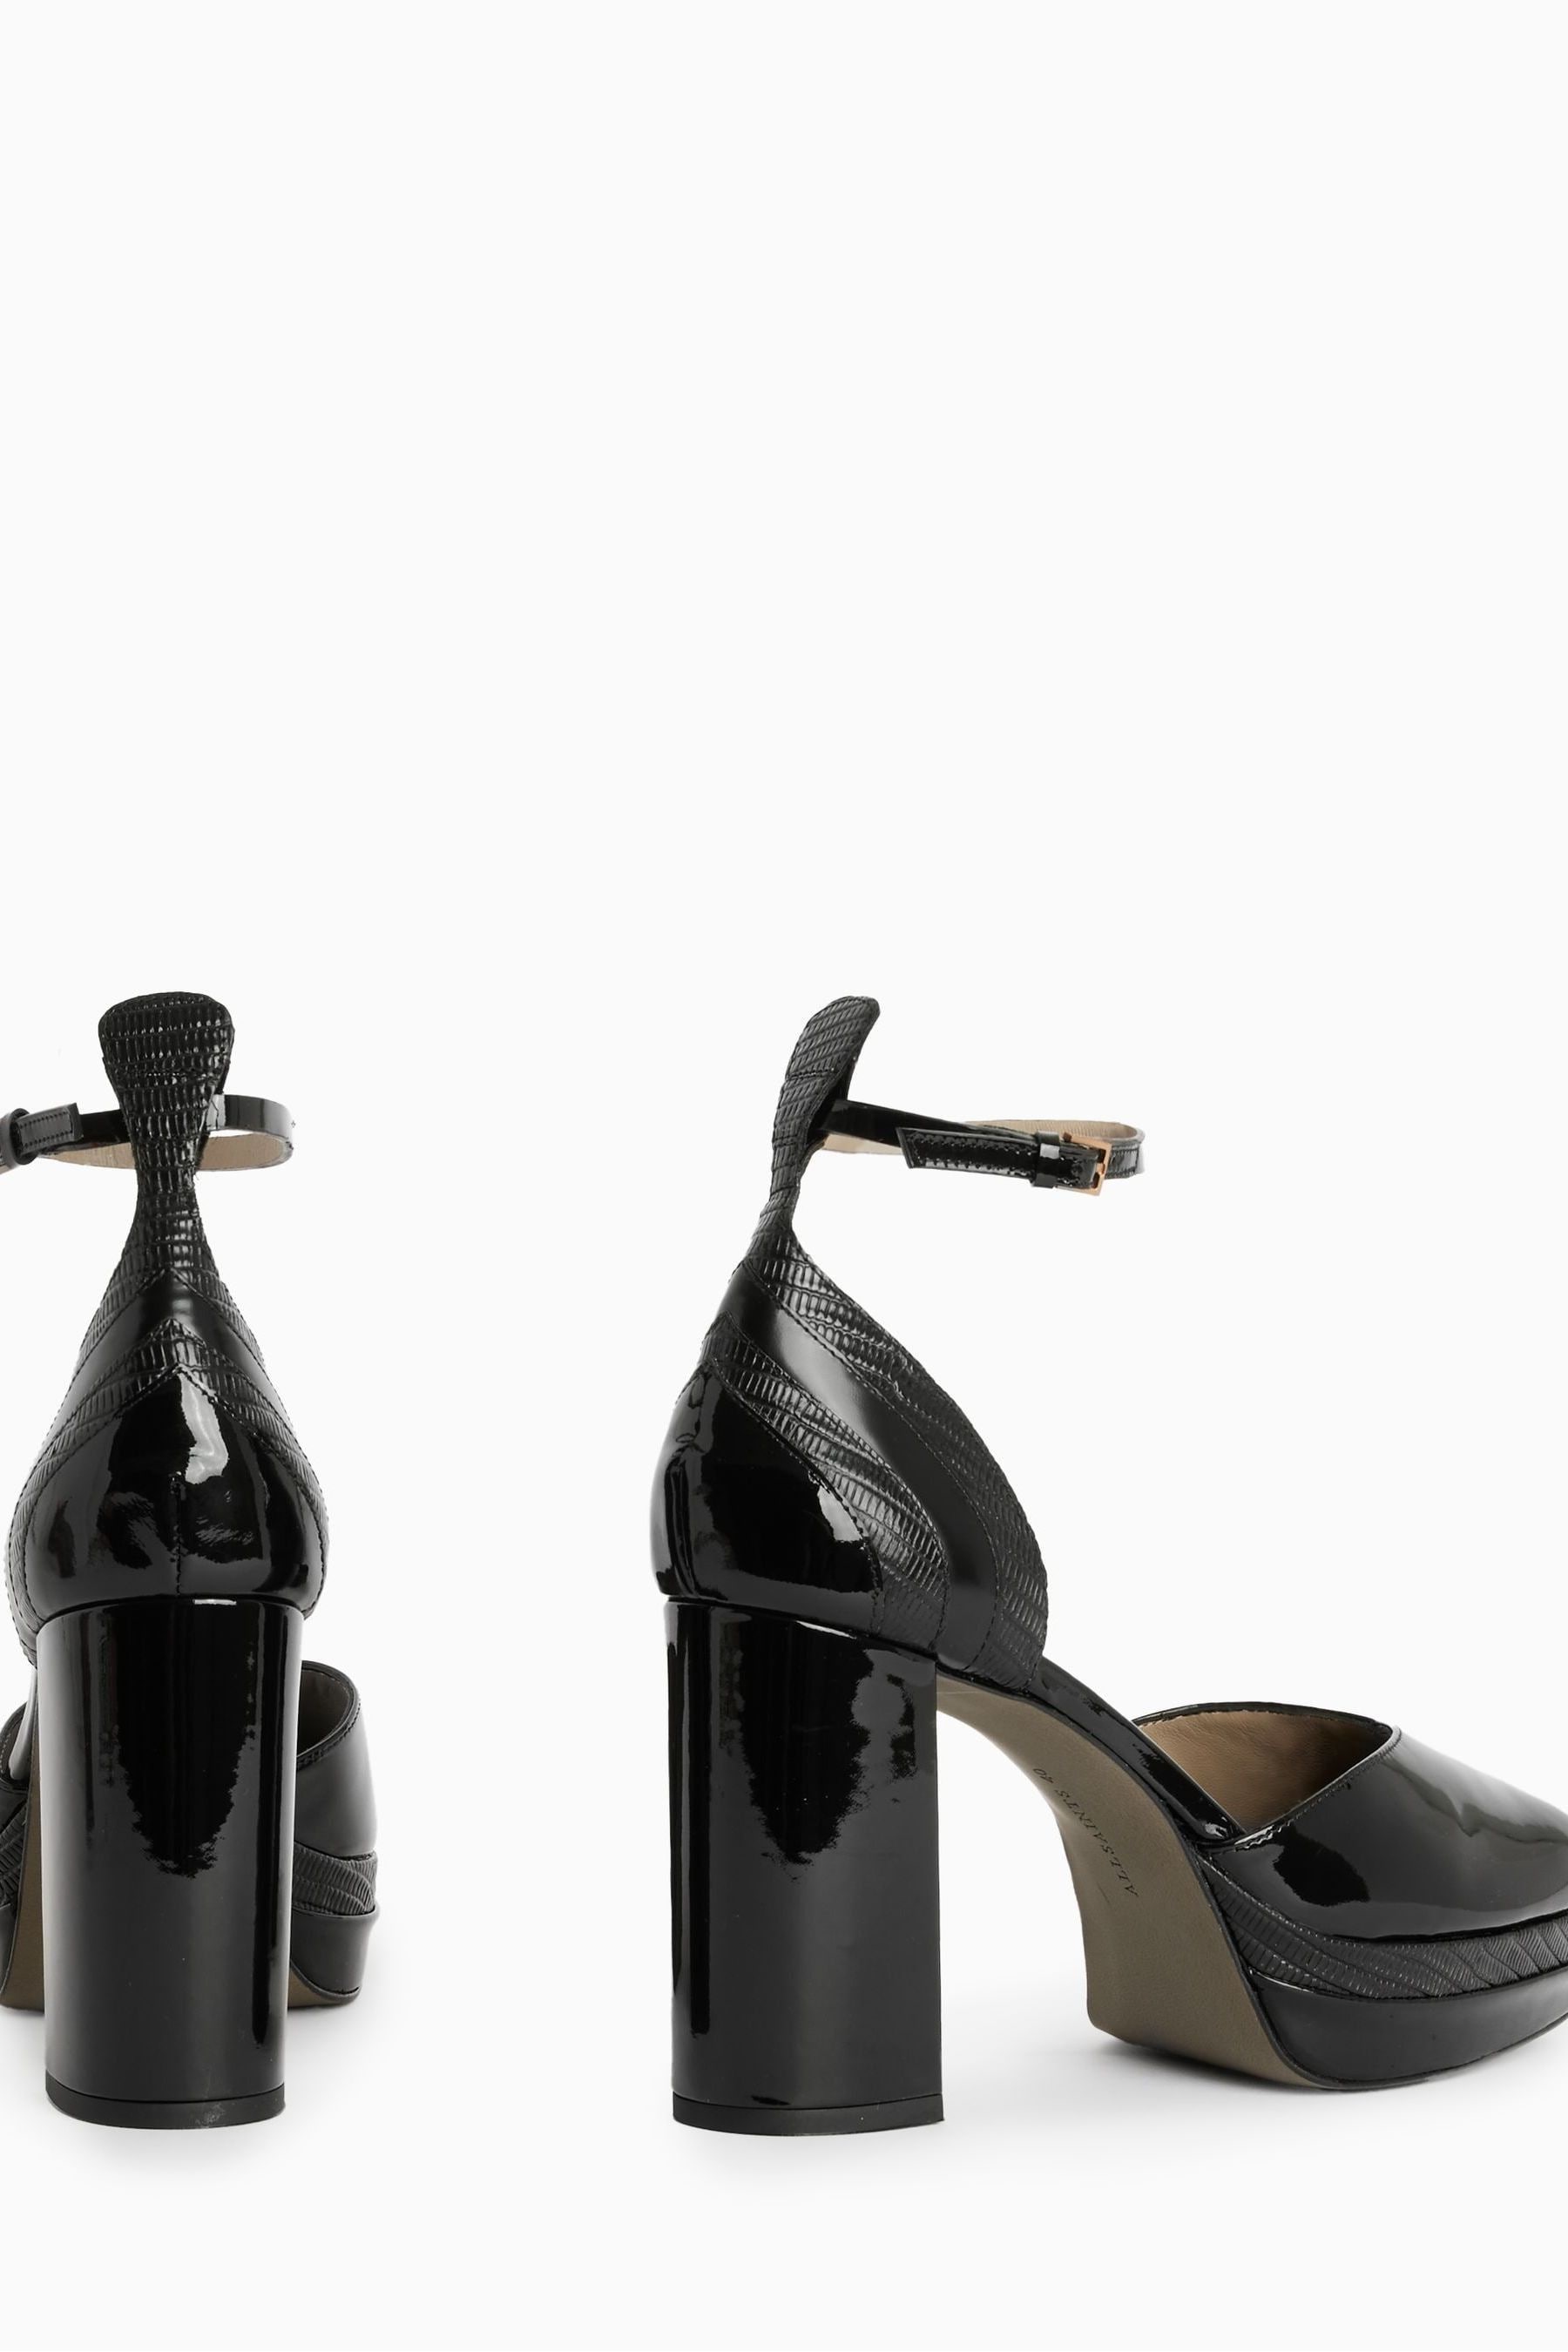 Buy AllSaints Tiffany Platform Black Heels from the Next UK online shop